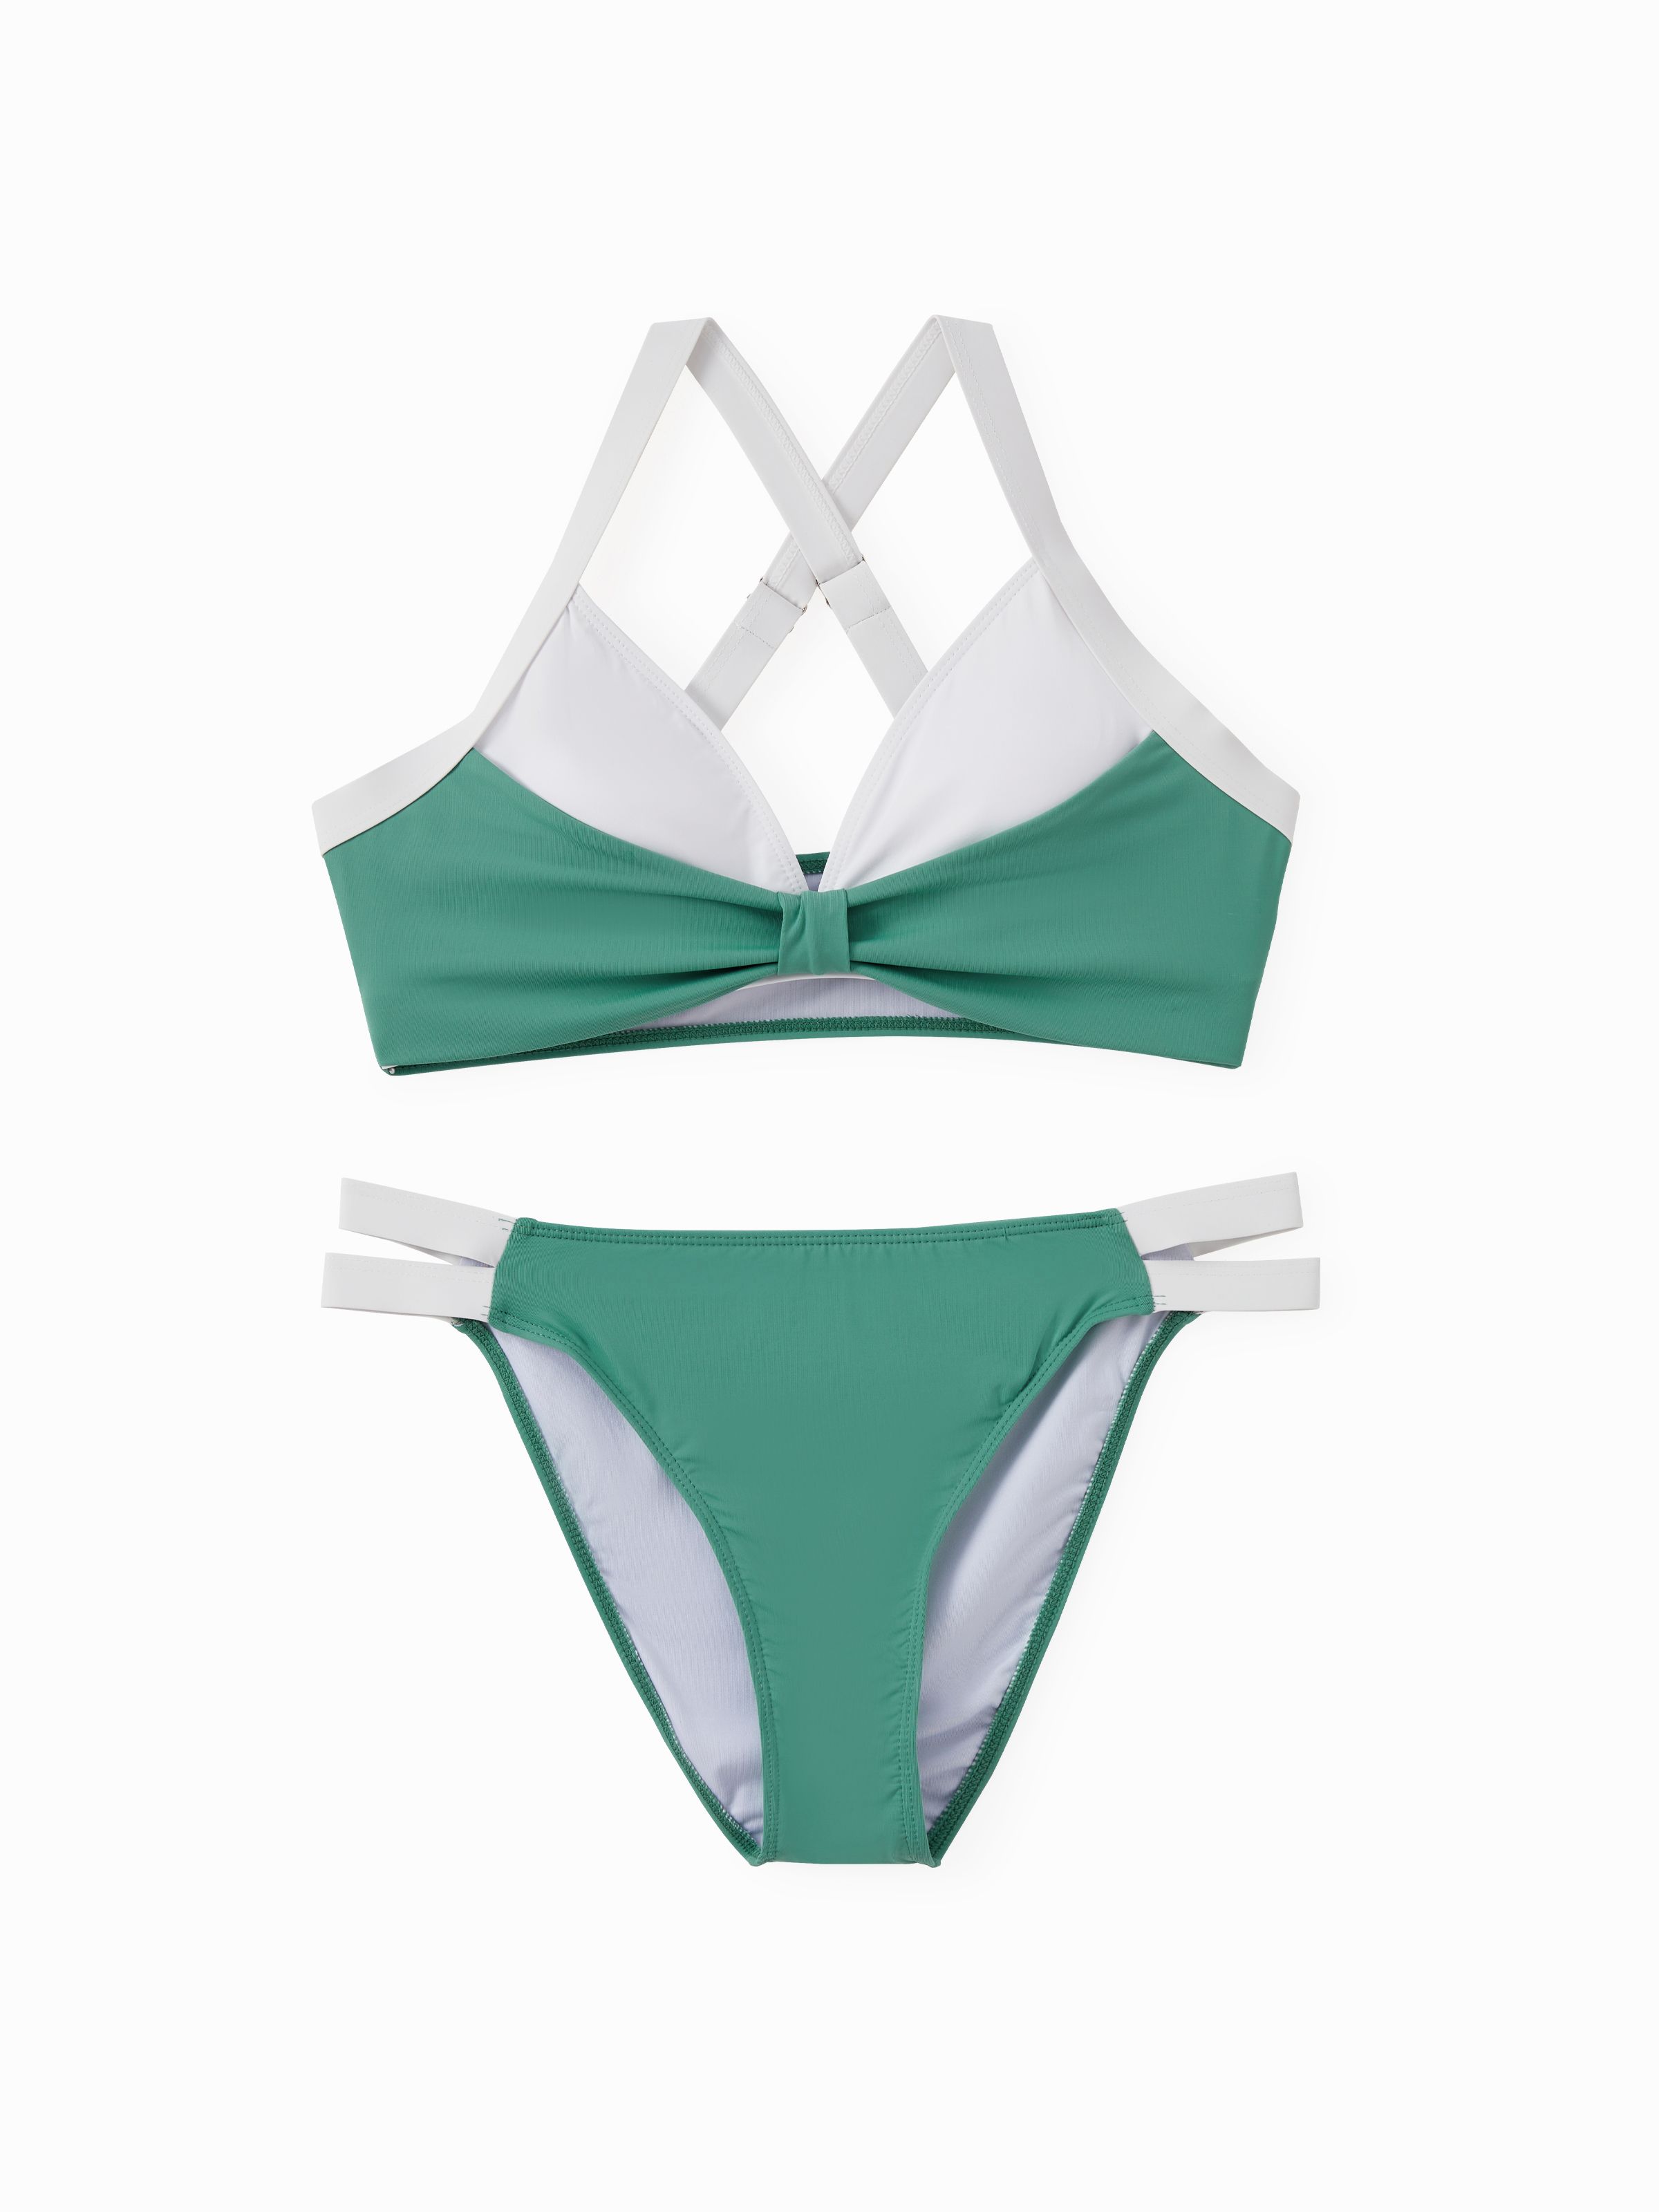 

Family Matching Green and White Color Block Drawstring Swim Trunks or Bikini (Sun-Protective)